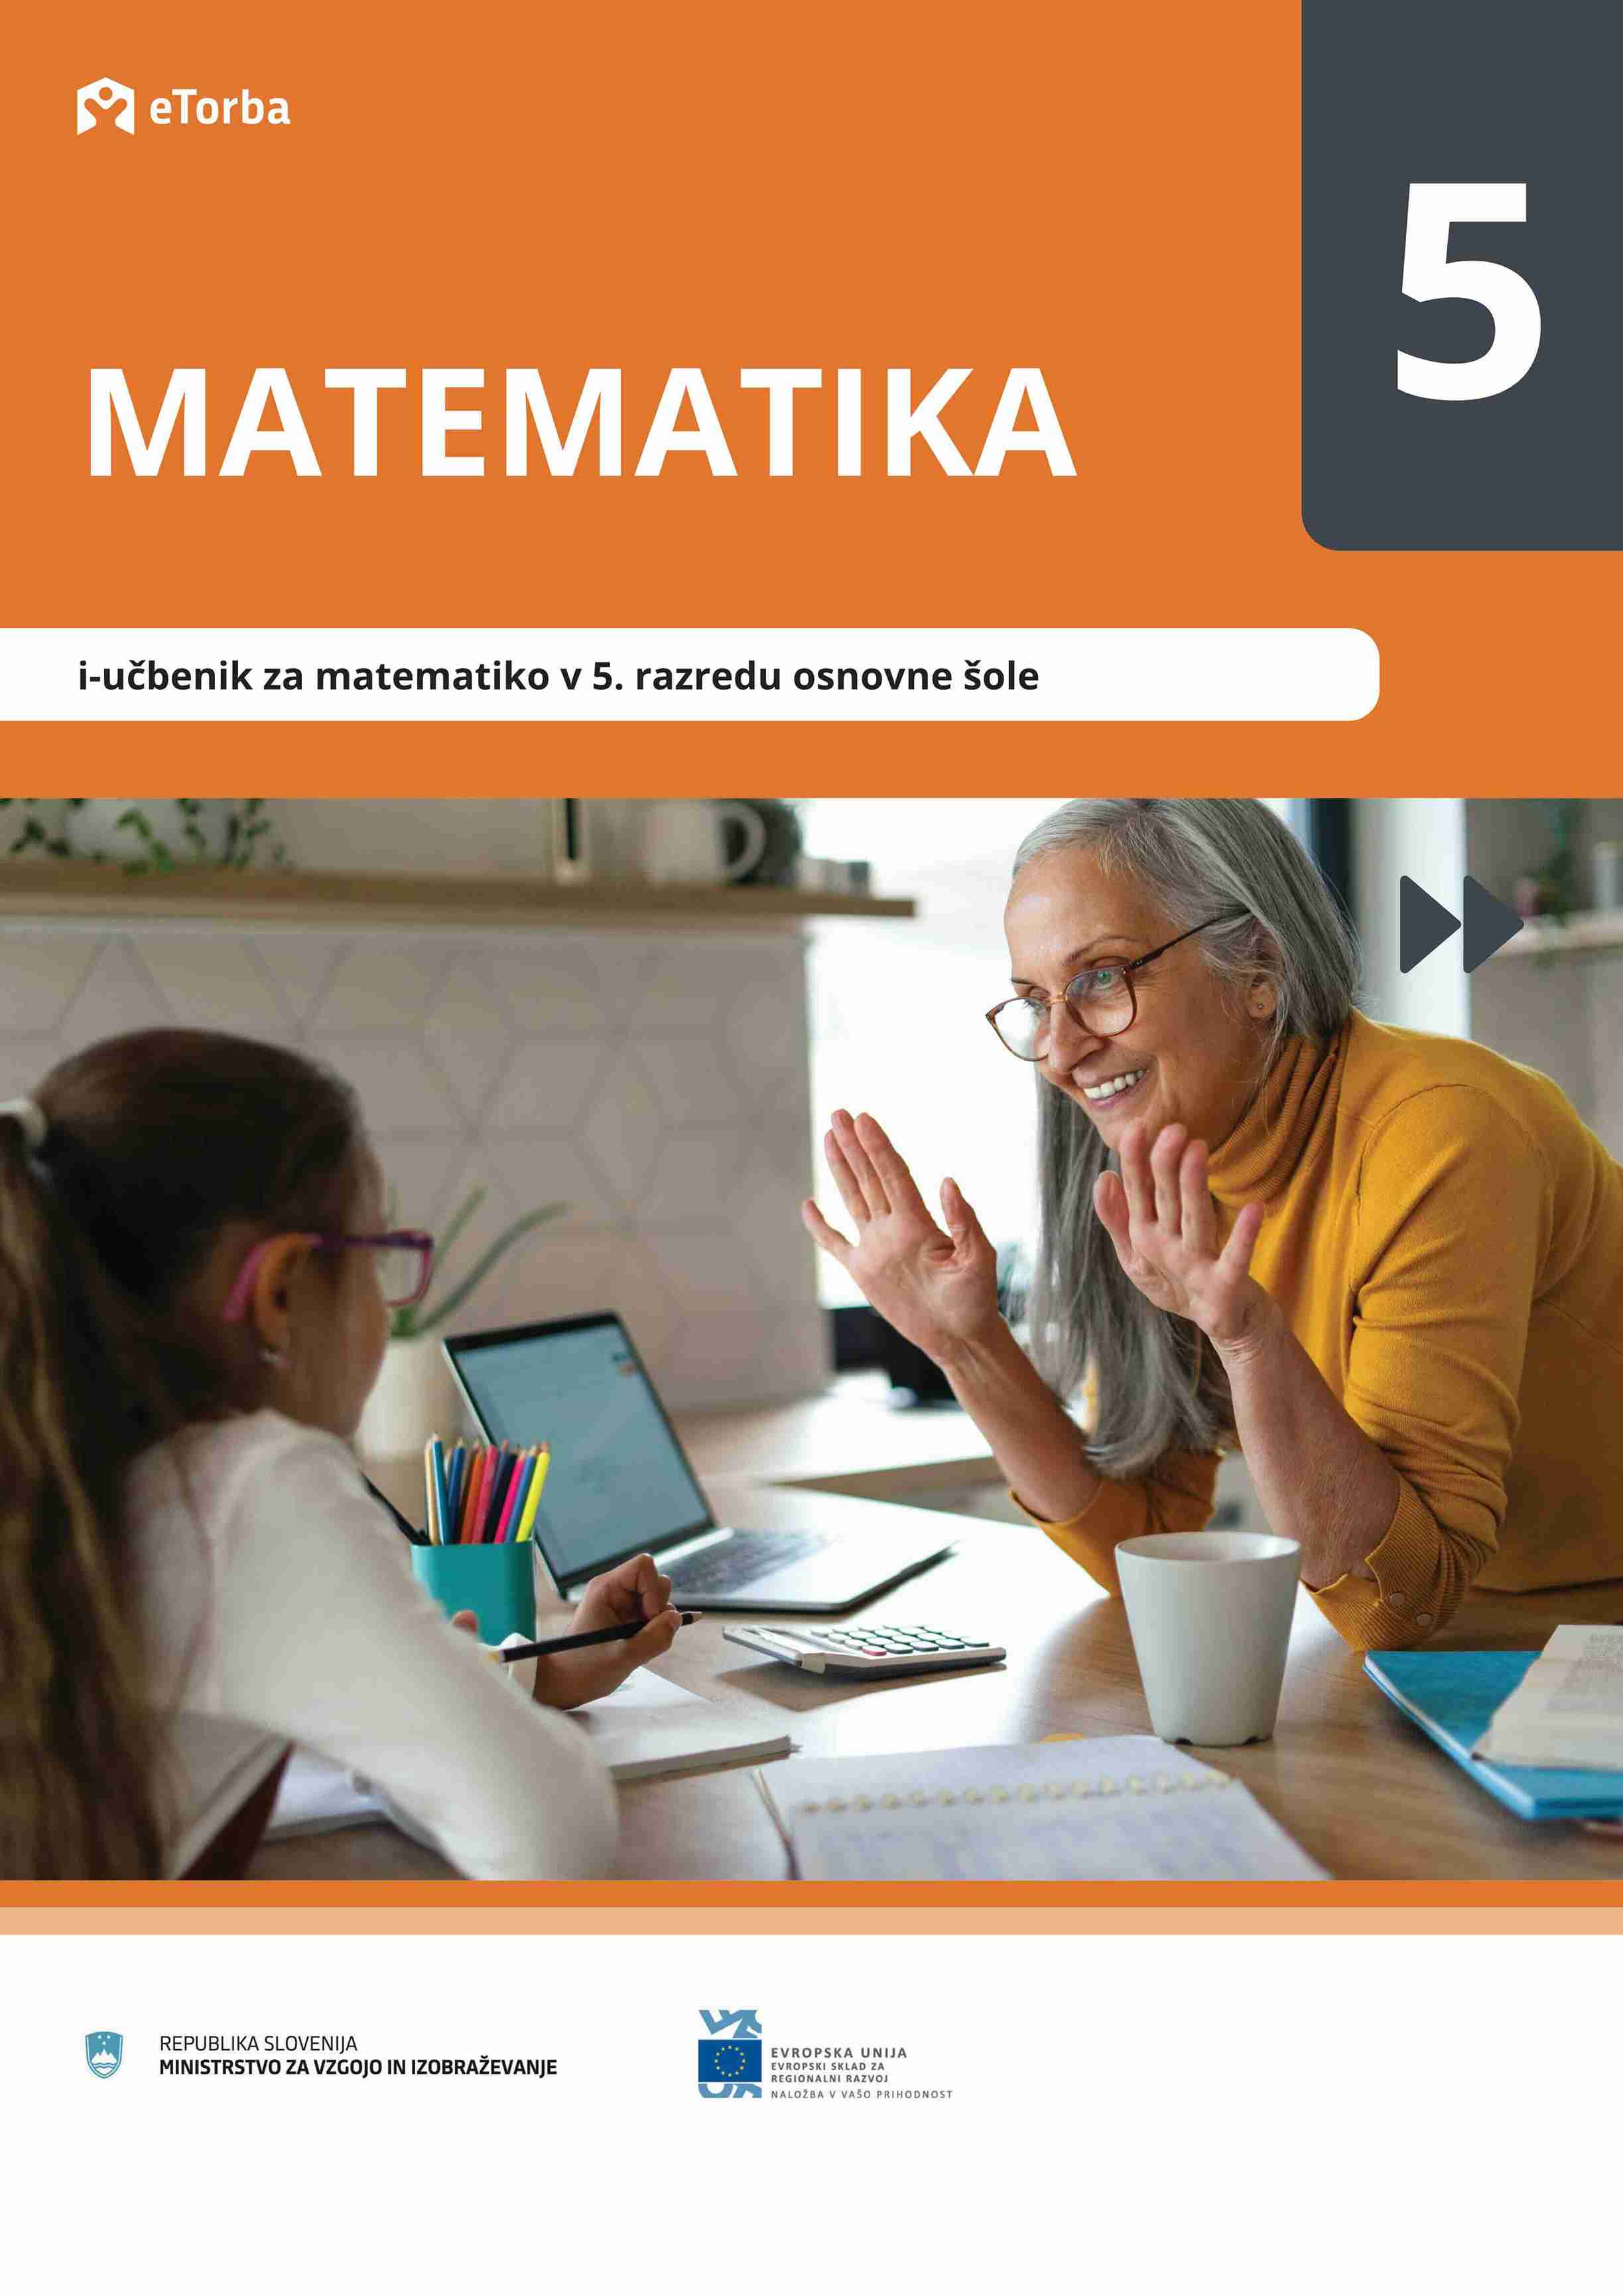 Naslovnica za e-gradivo MATEMATIKA 5: i-Učbenik za matematiko v 5. razredu osnovne šole